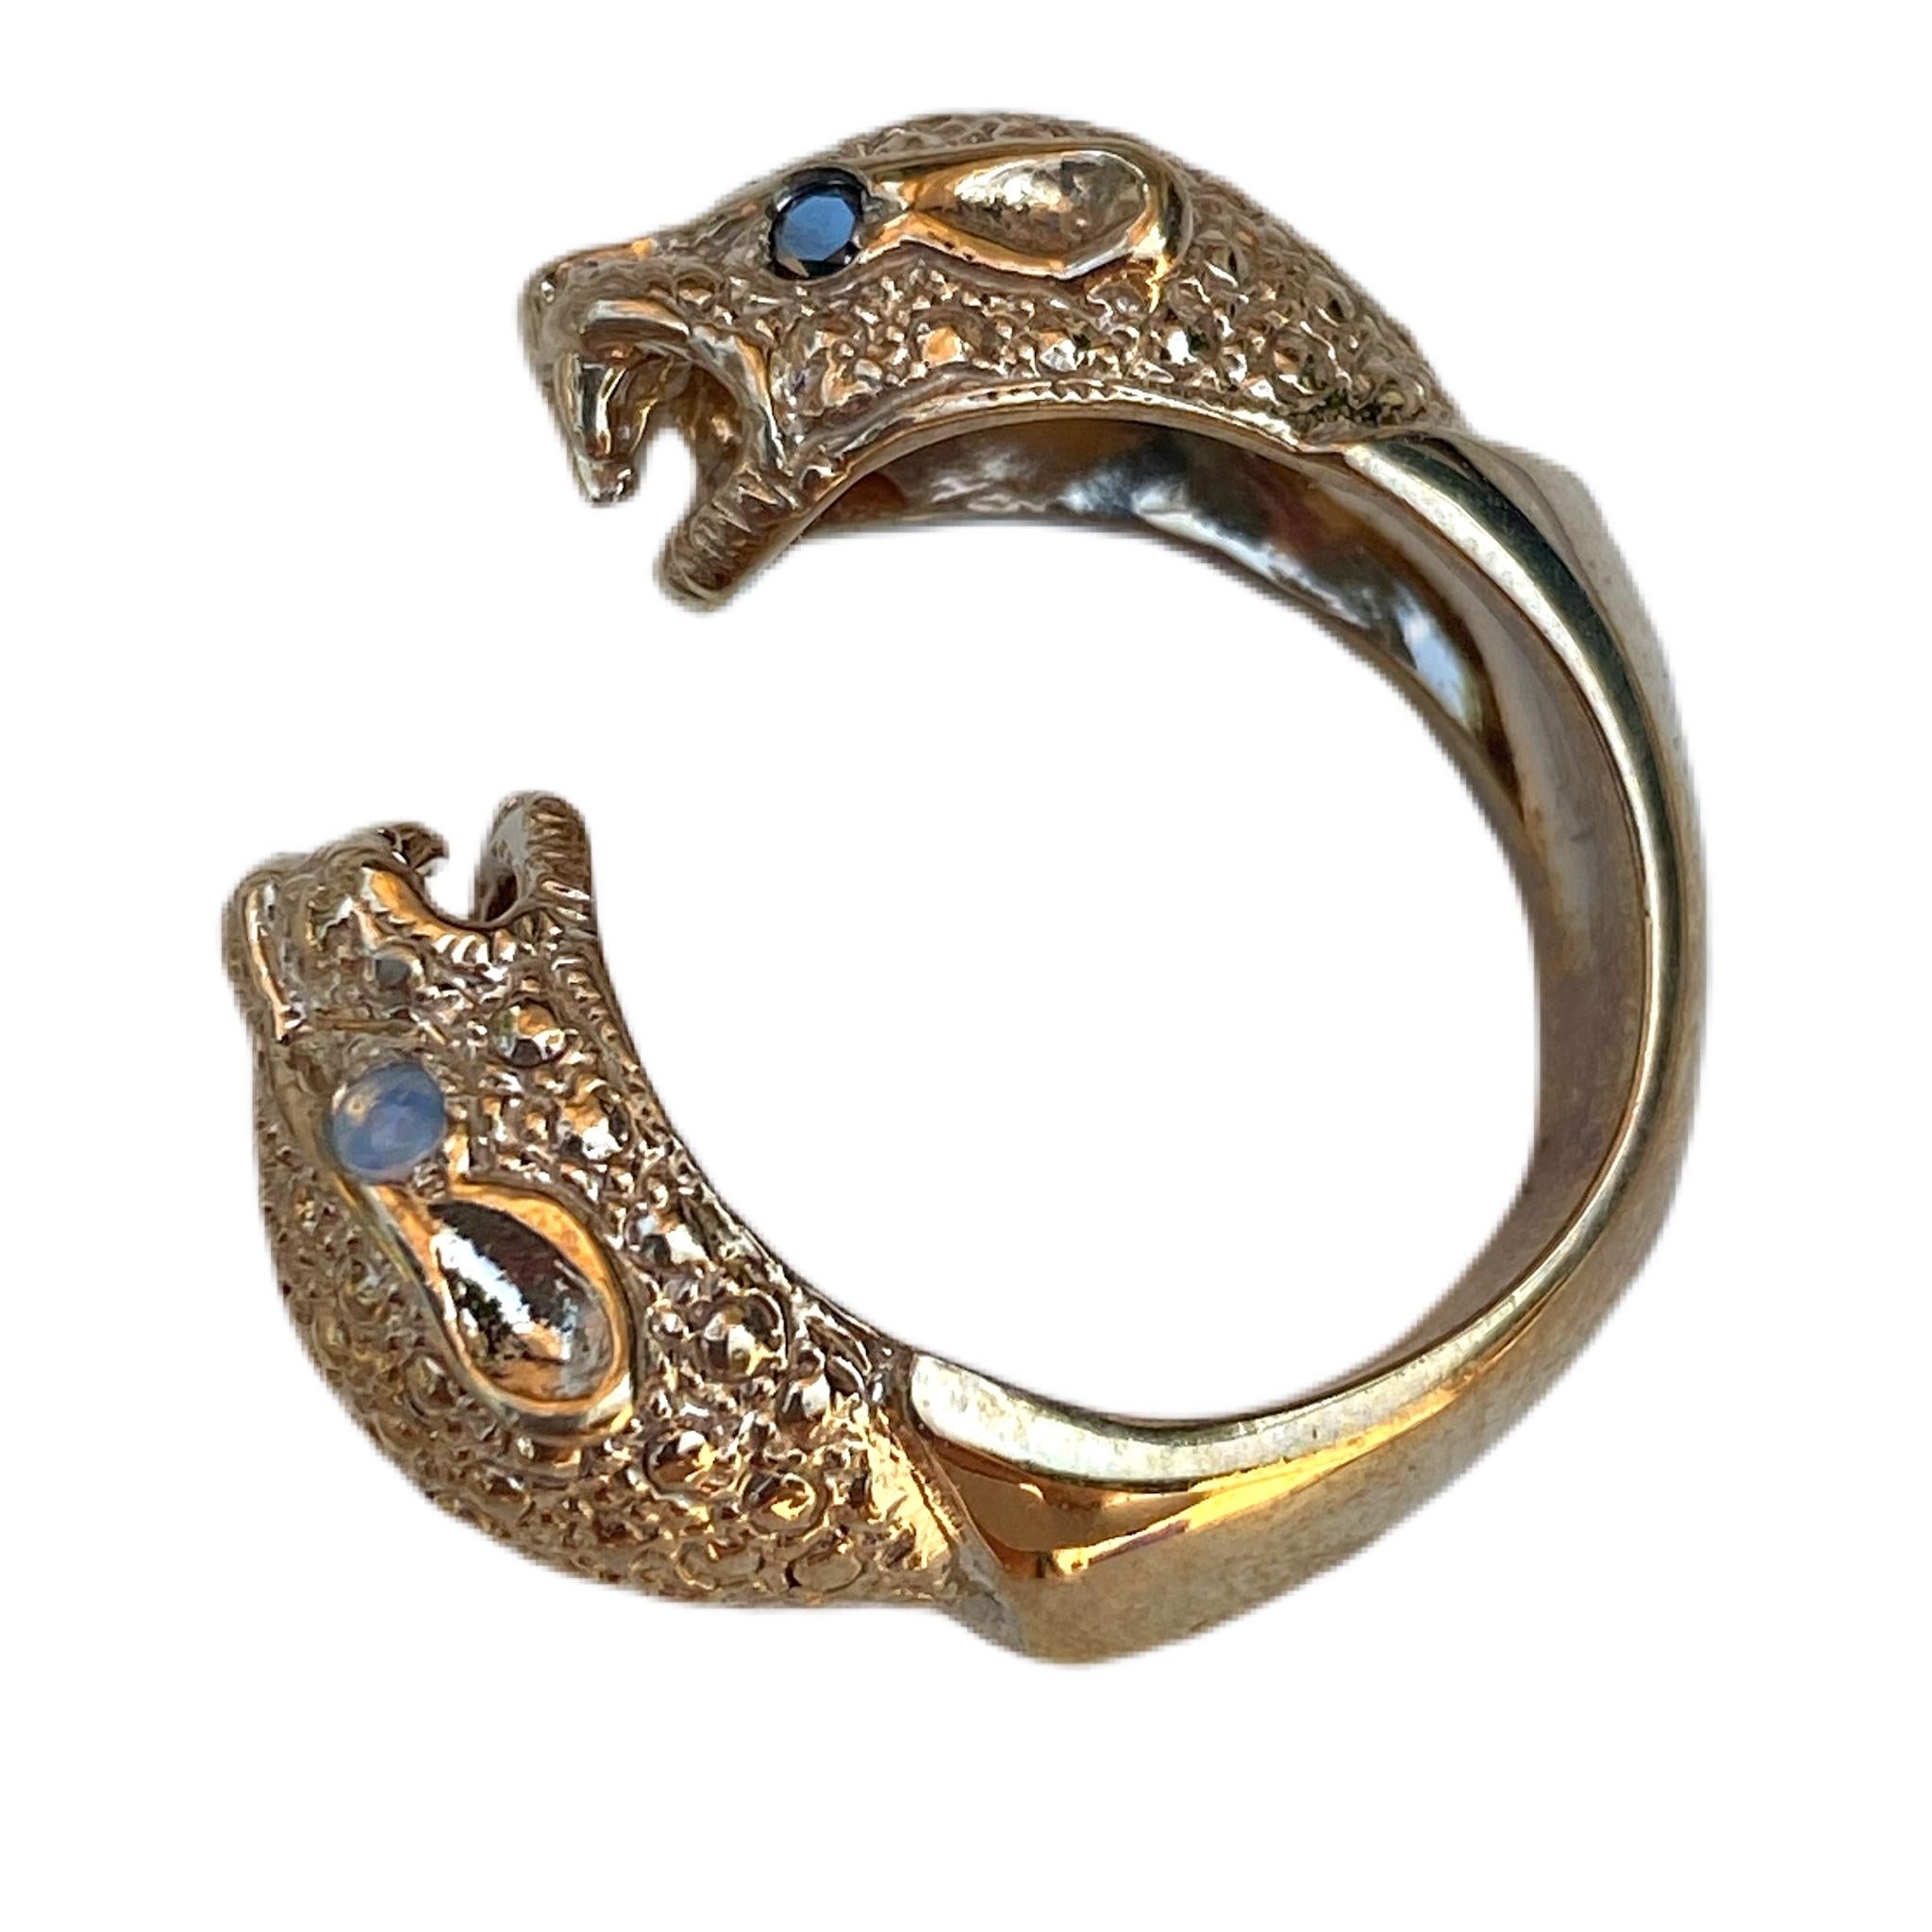 2 pcs Black Diamond 1 pc Tanazanite 1 pc Opal Jaguar Ring 14 k Gold Vermeil Animal Resizable J Dauphin
J DAUPHIN Ring 